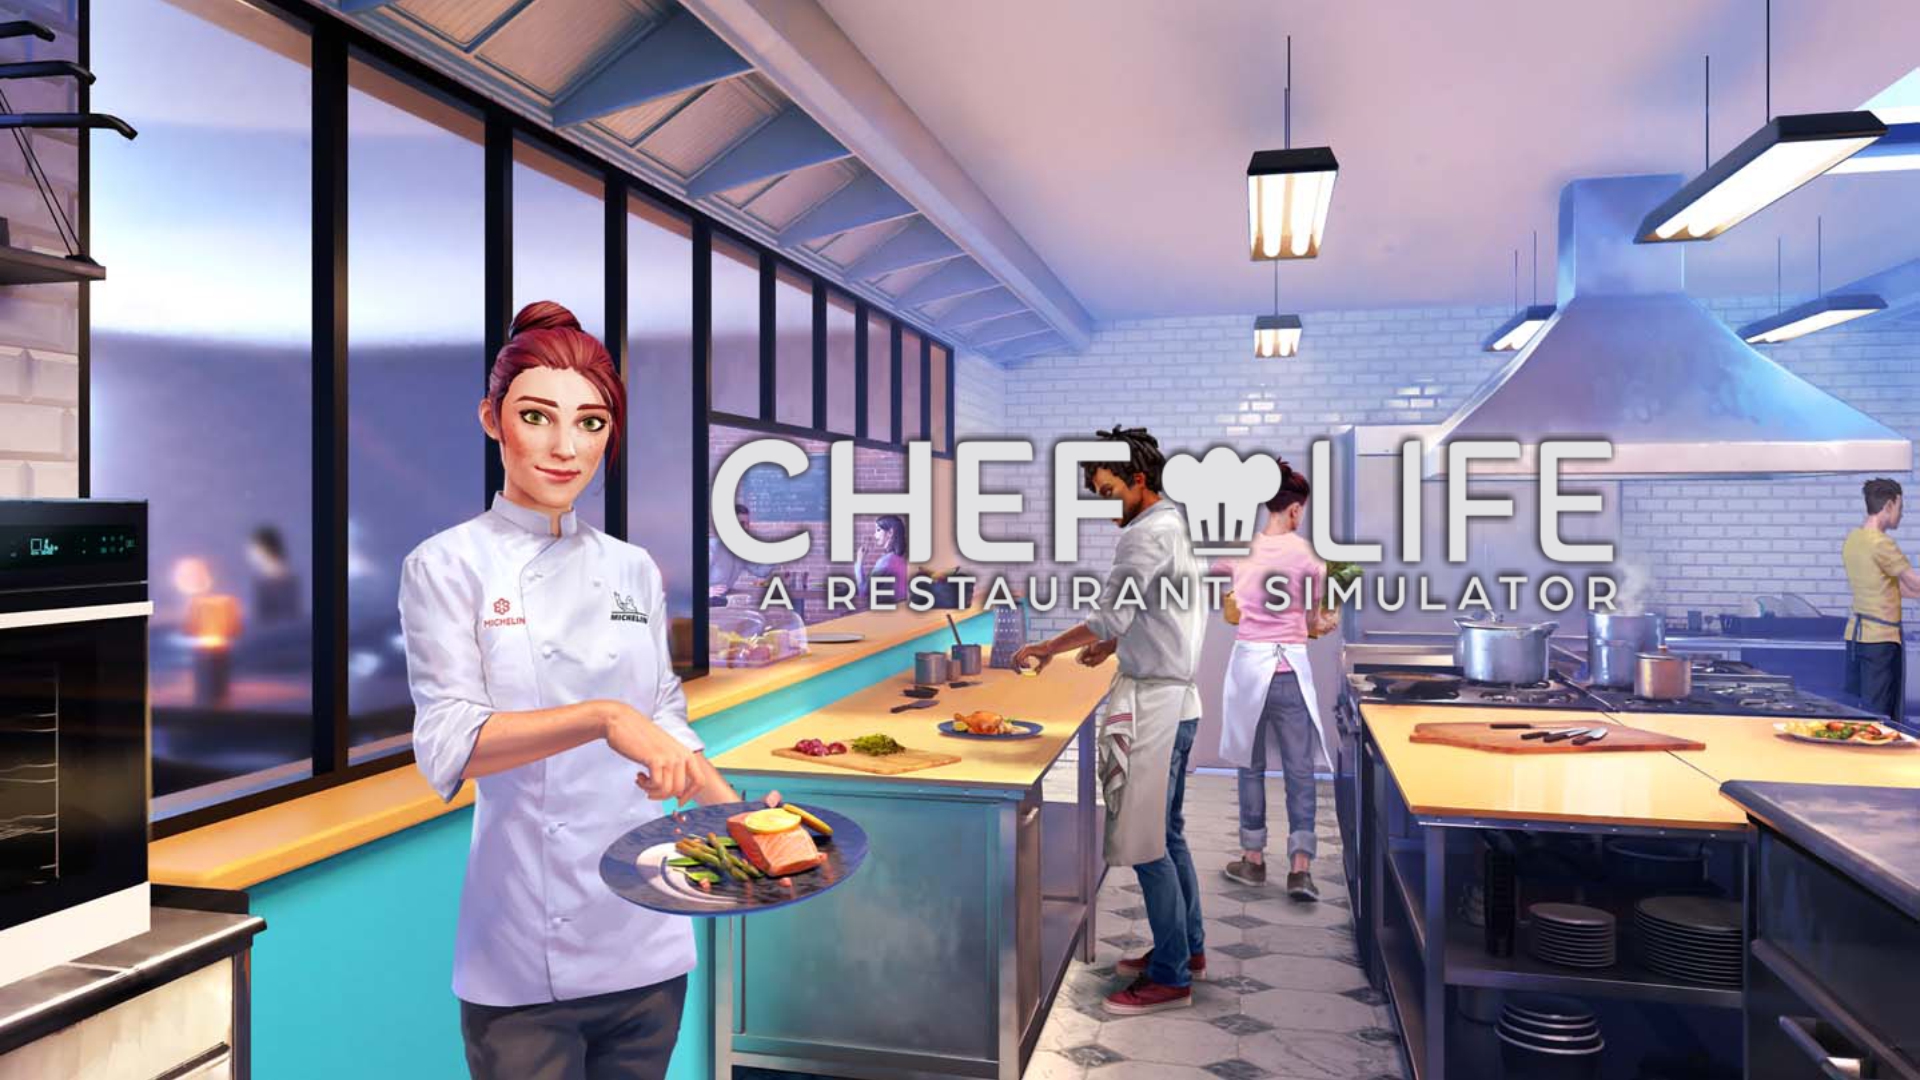 Chef Simulator en Steam